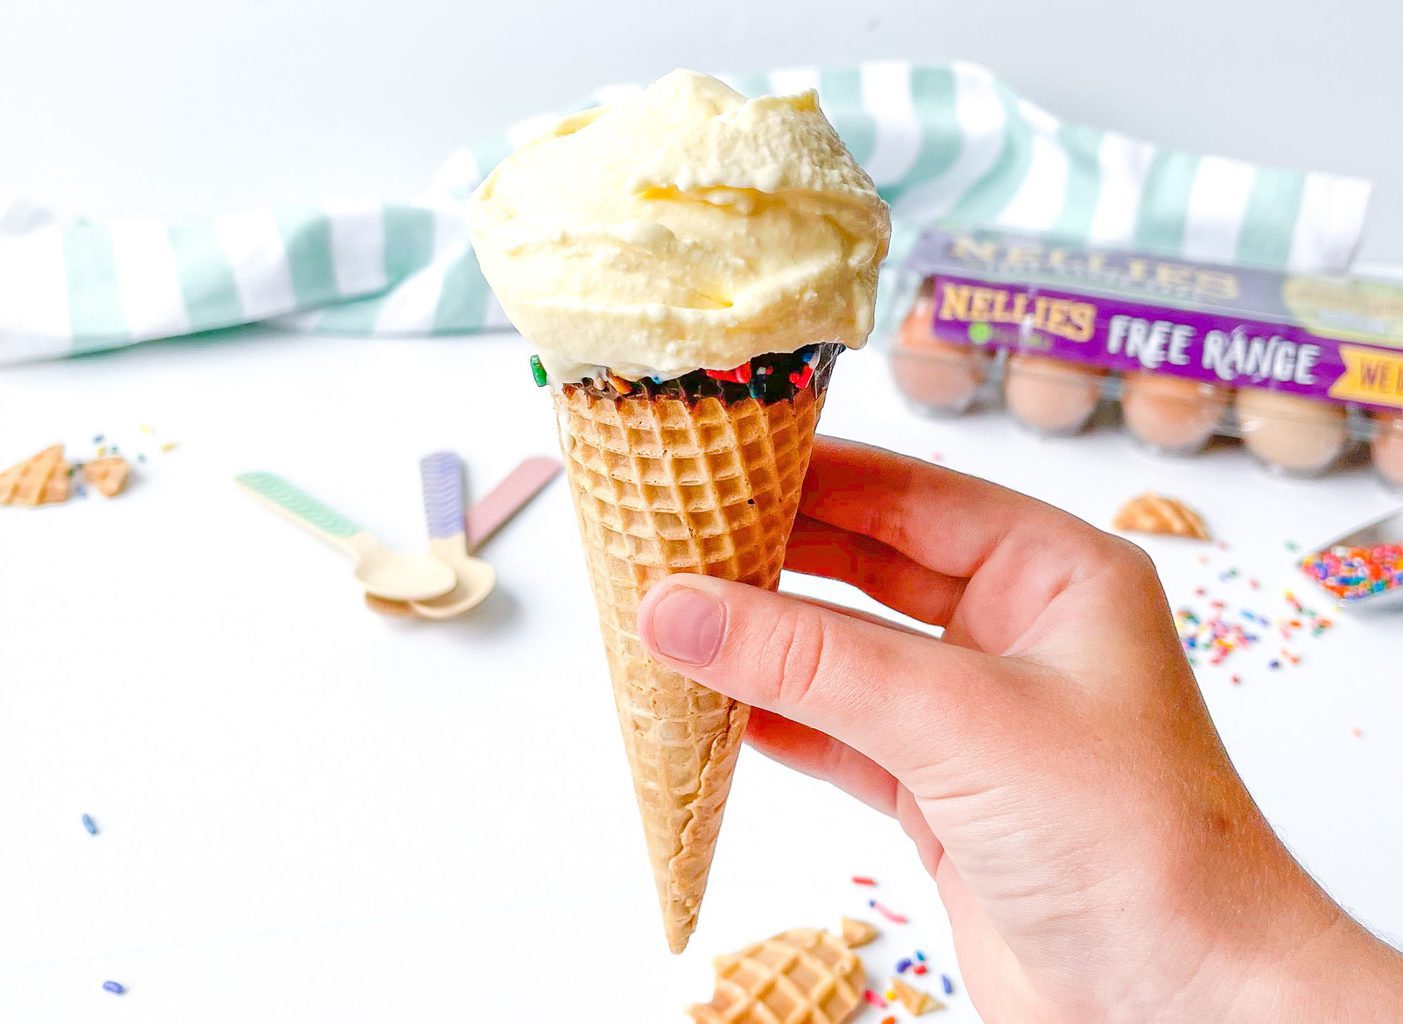 Child's hand holding marshmallow vanilla ice cream cone